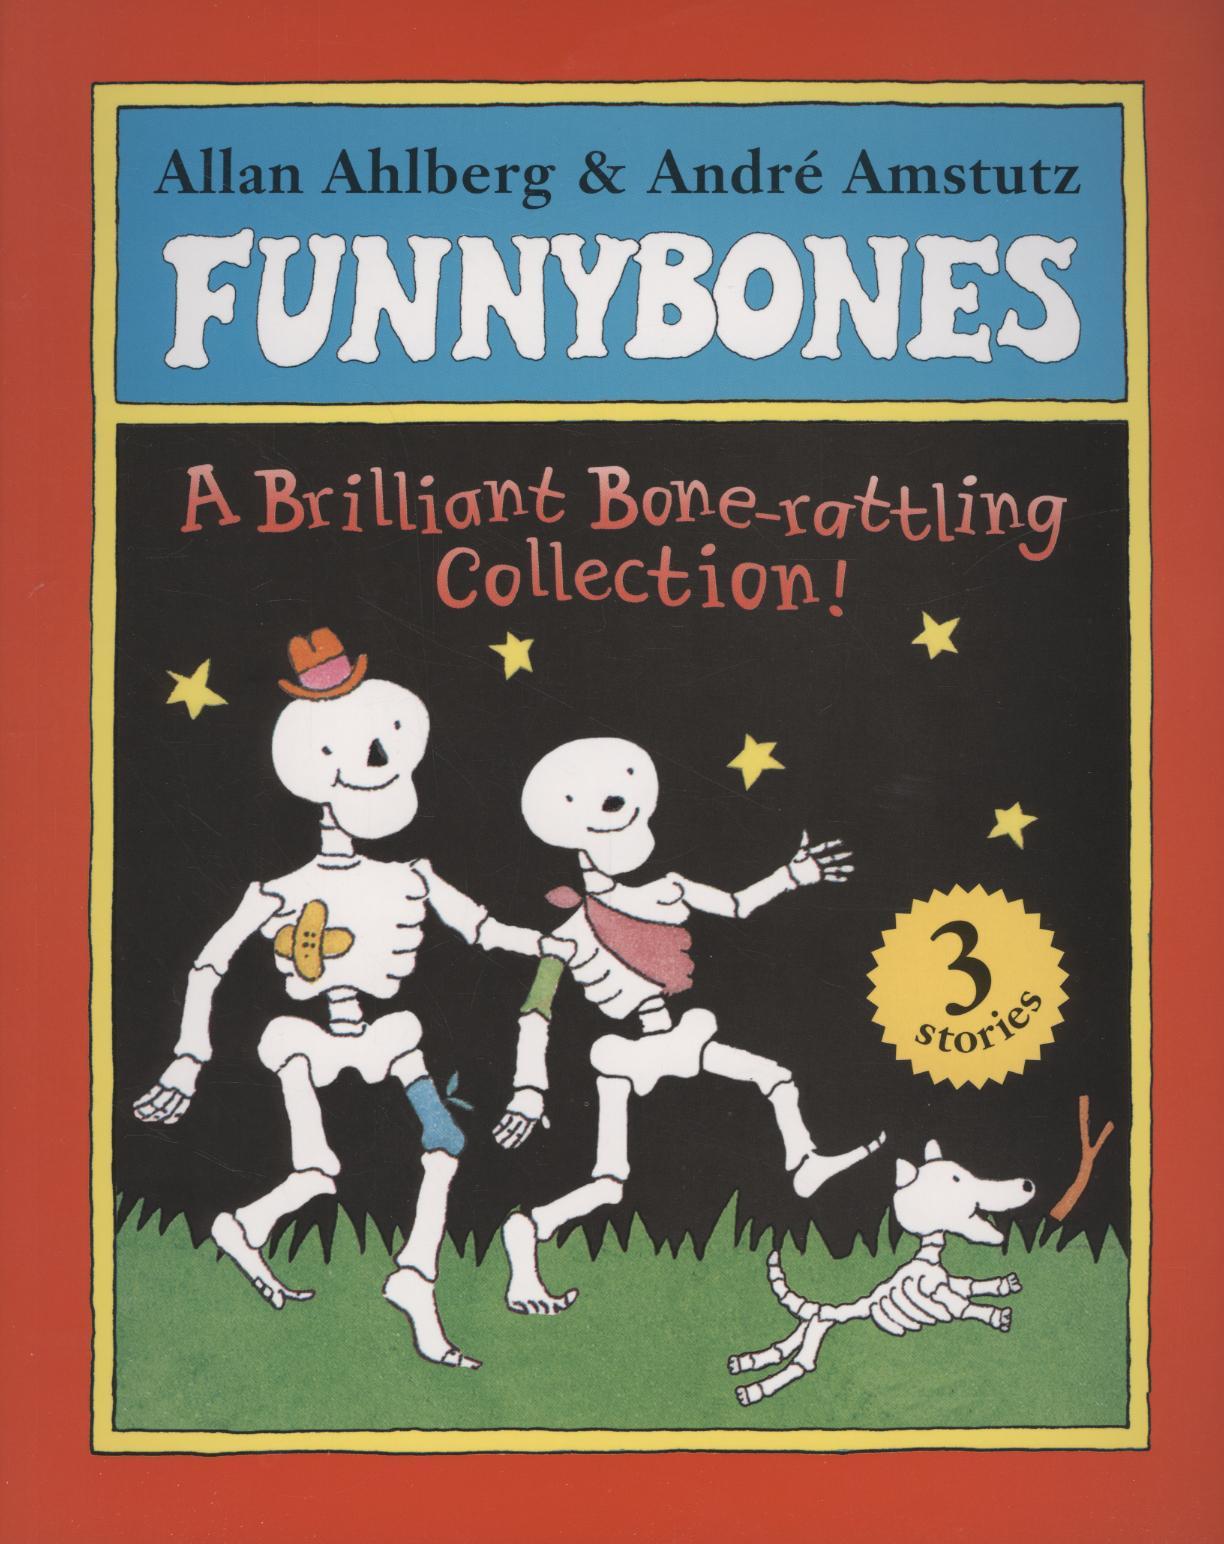 Funnybones: a Bone Rattling Collection